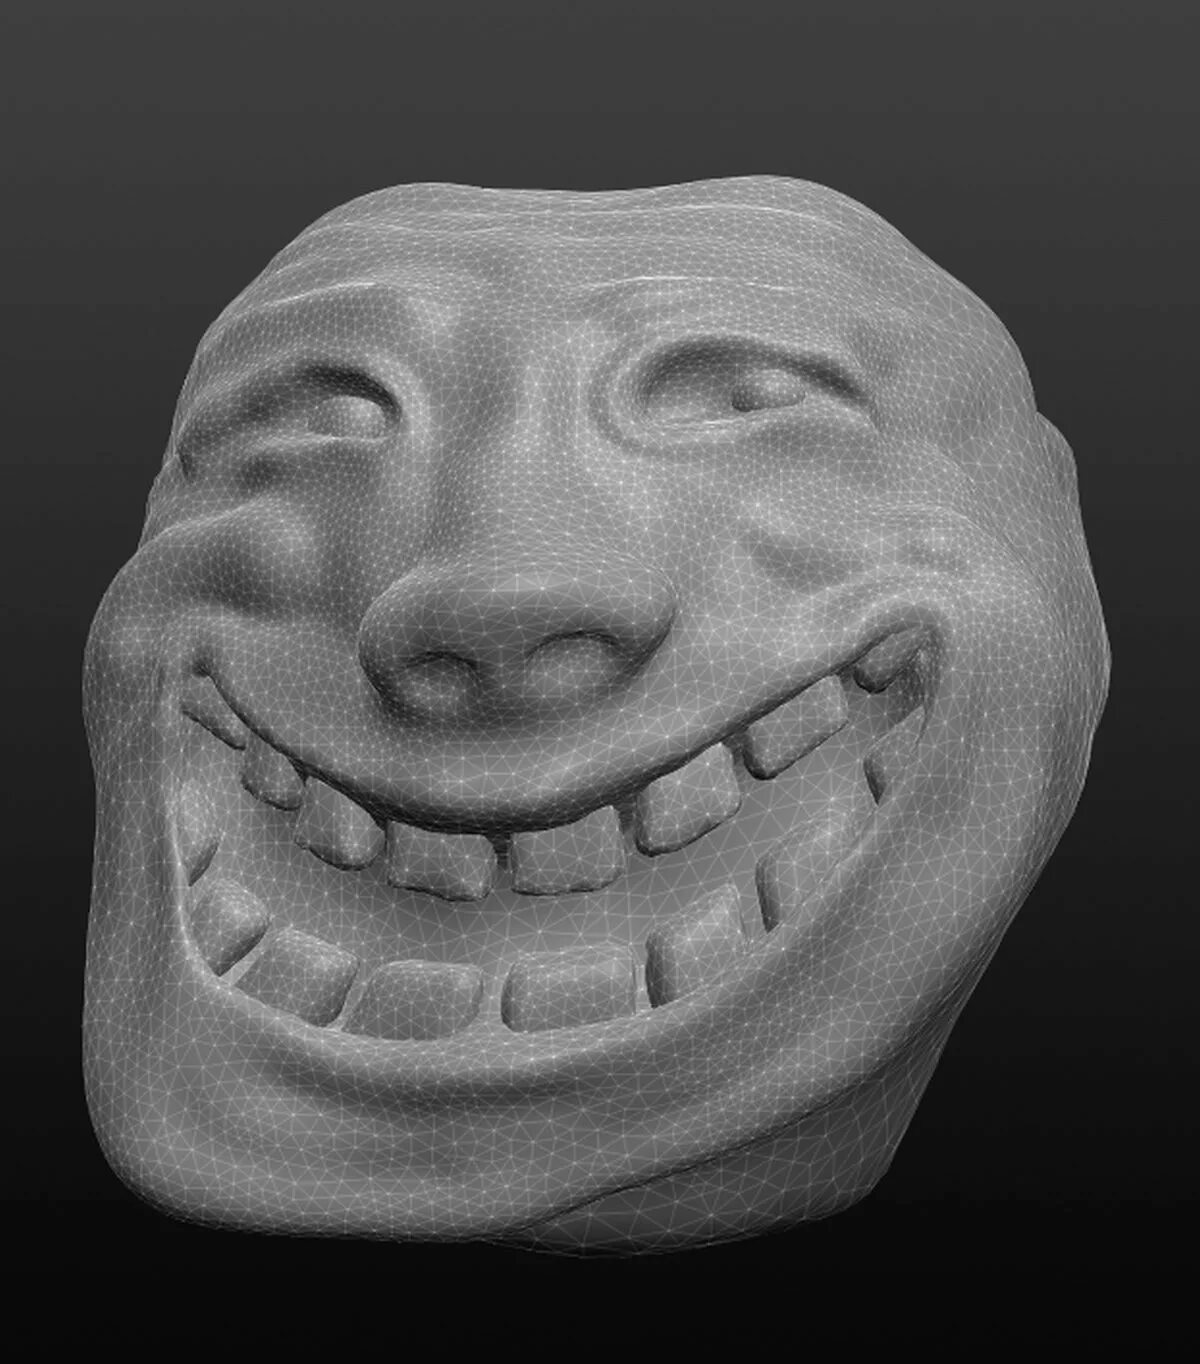 Trollface 3d. Trollface 3d model. Страшный троллфейс 3д модель. Кольцо троллфейс 3д модель. Троллфейс мод